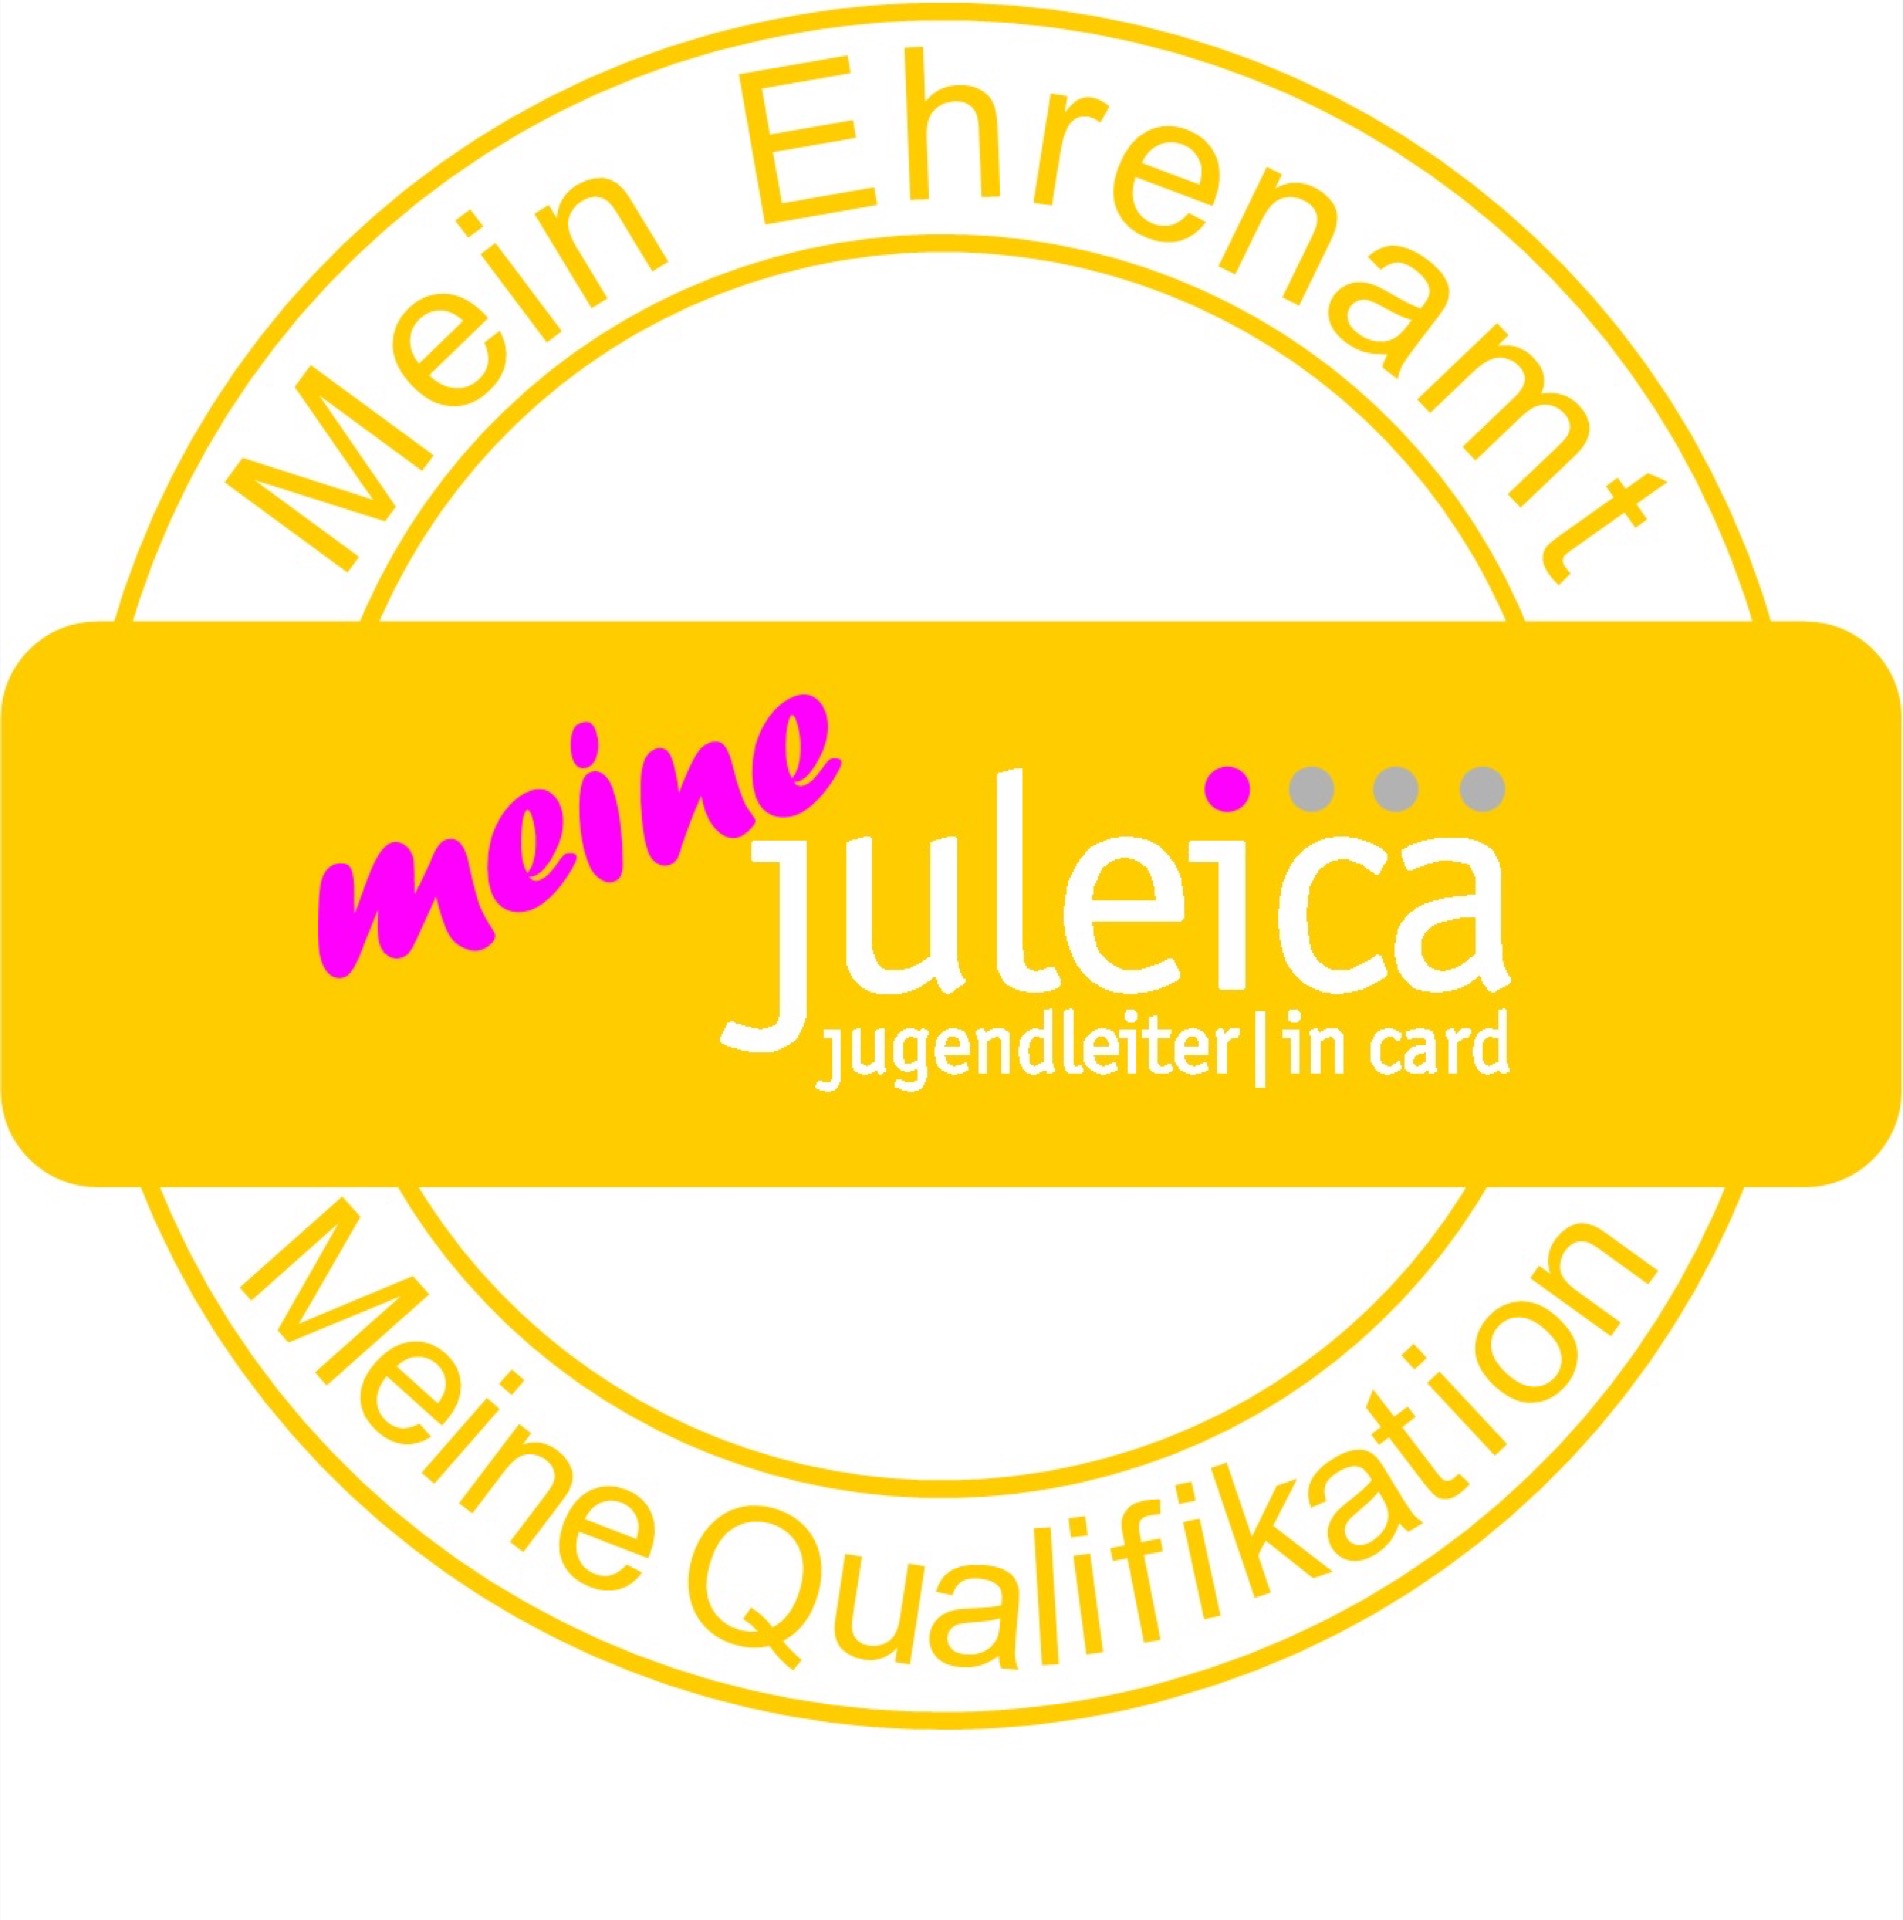 Juleica (Jugendleiter/in-Card)